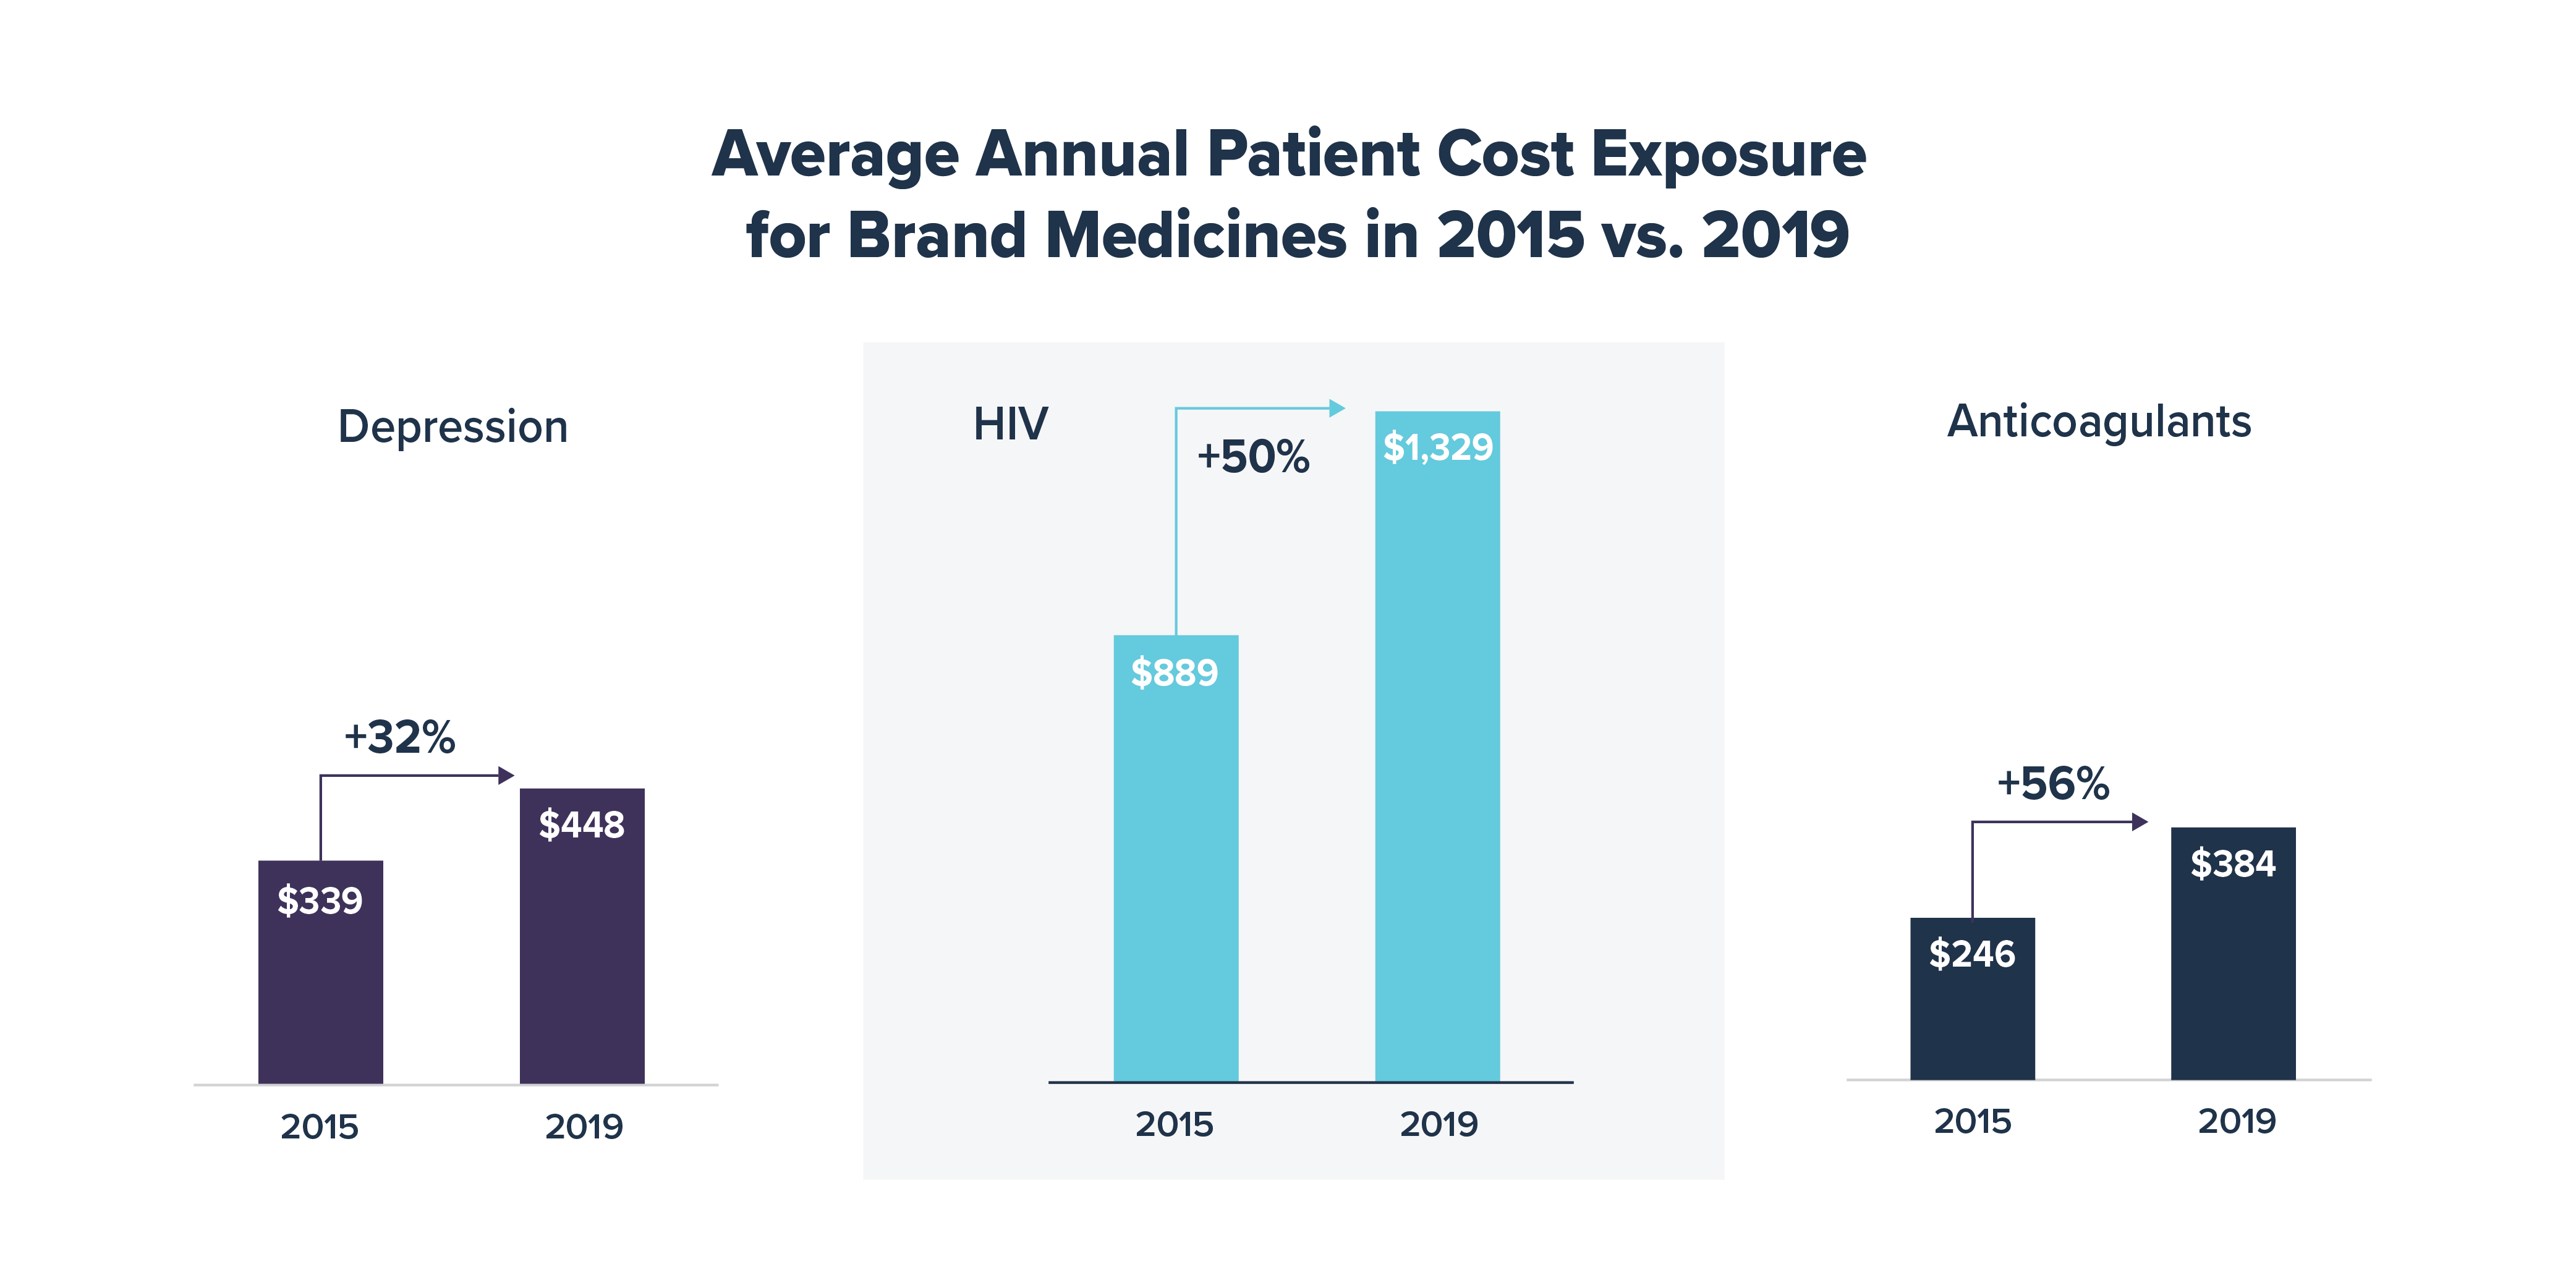 Average Annual Patient Cost Exposure for Brand Medicines in 2015 vs 2019